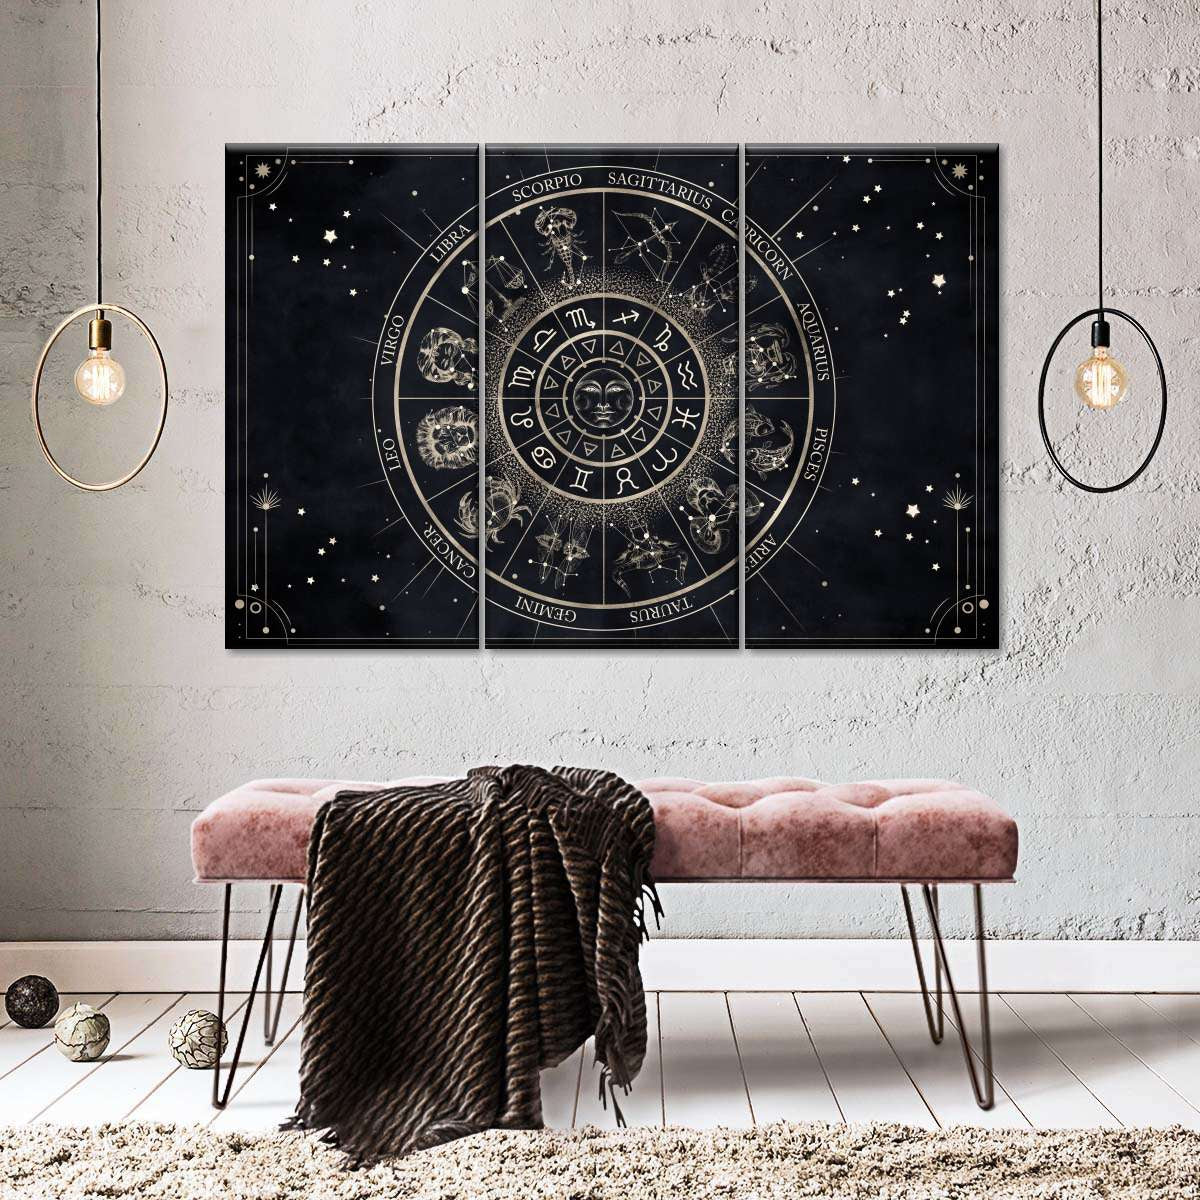 Astrology-Themed Wall Art and Décor